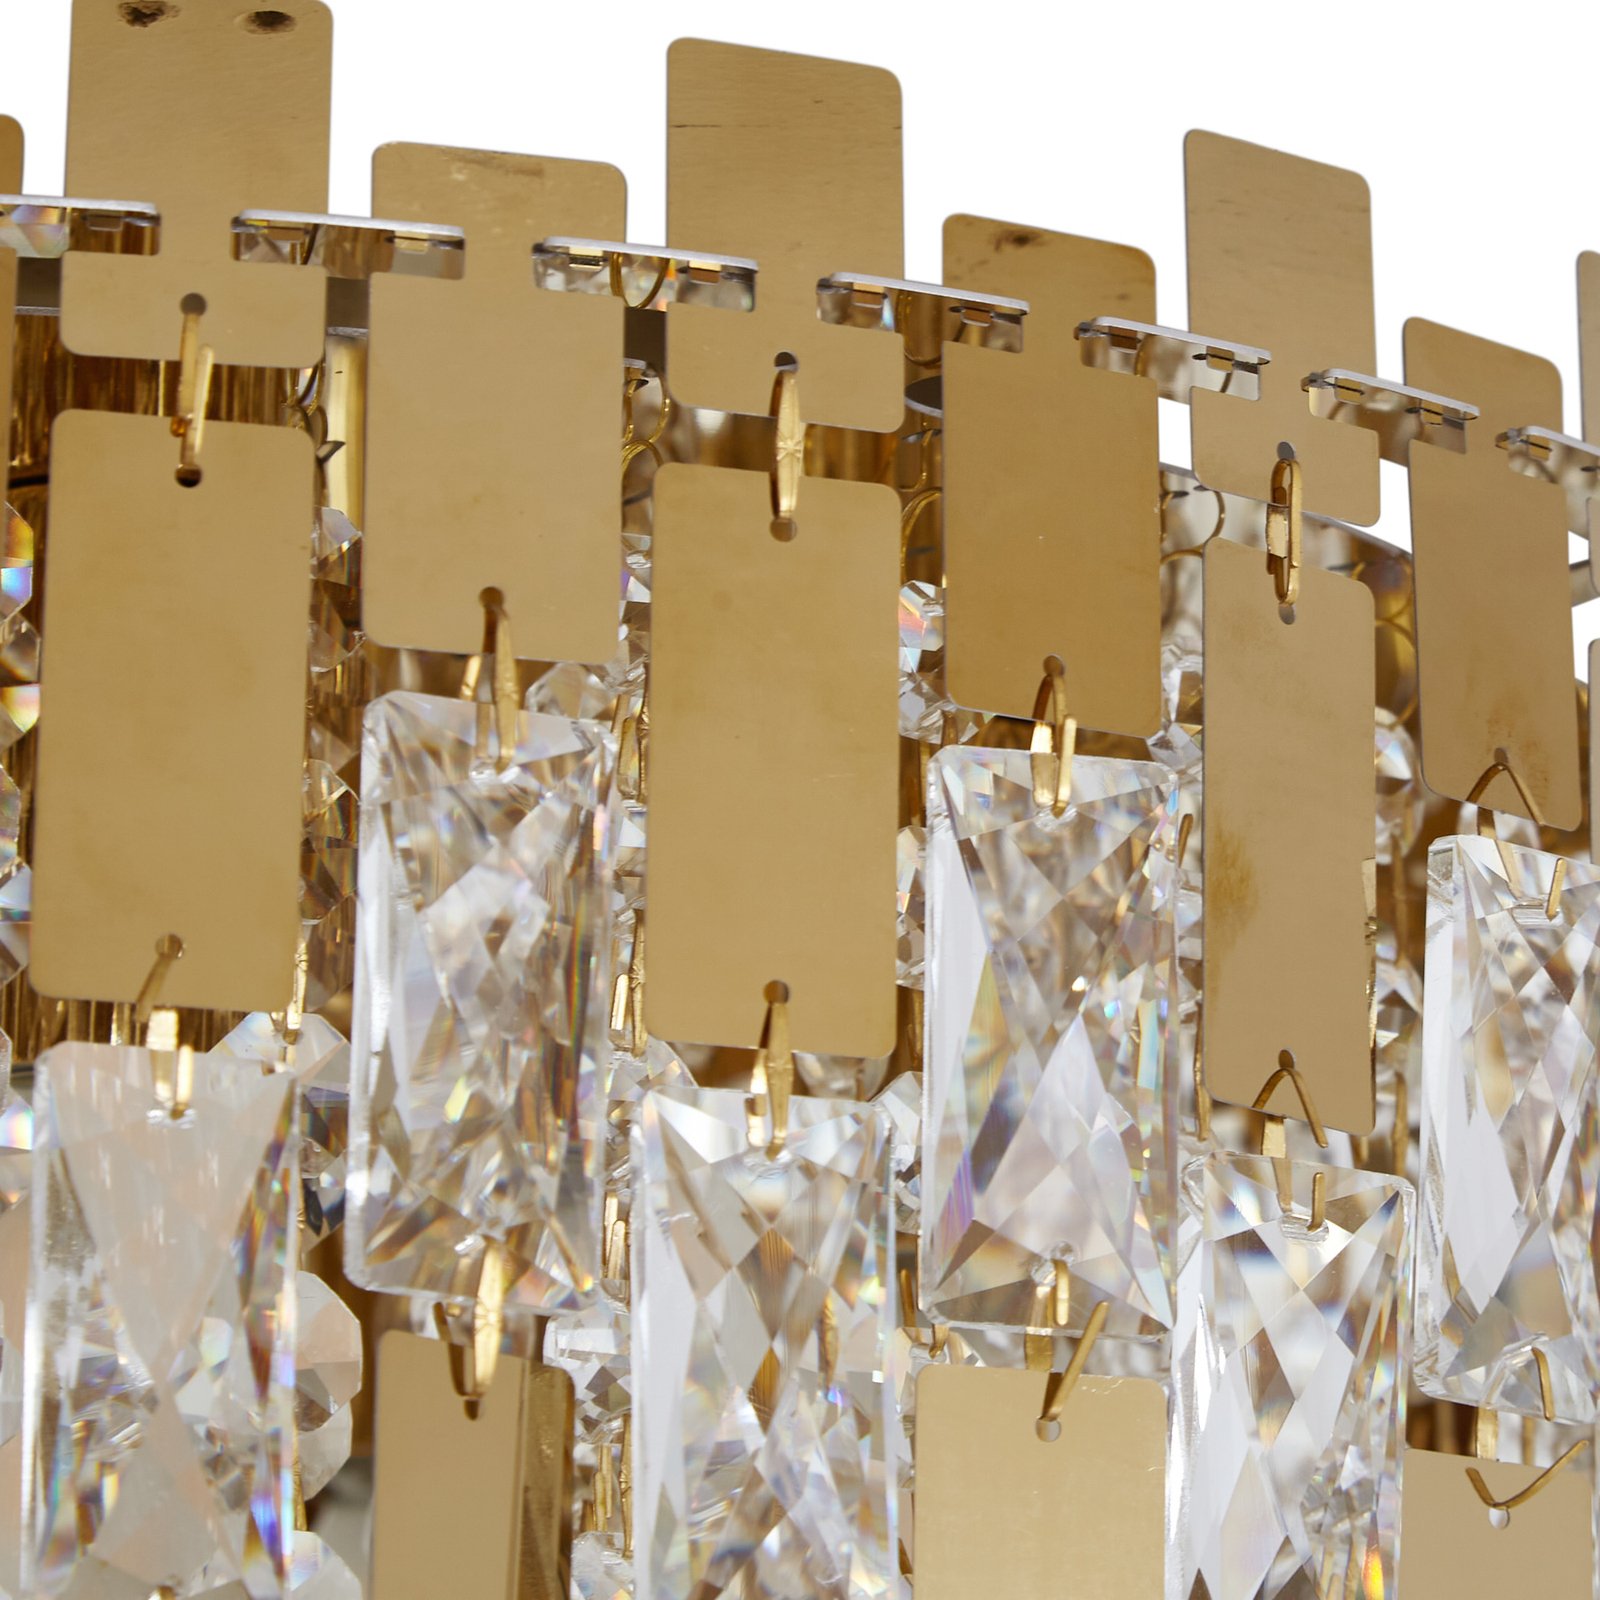 Lucande plafondlamp Arcan, goud, kristalglas, Ø 40 cm